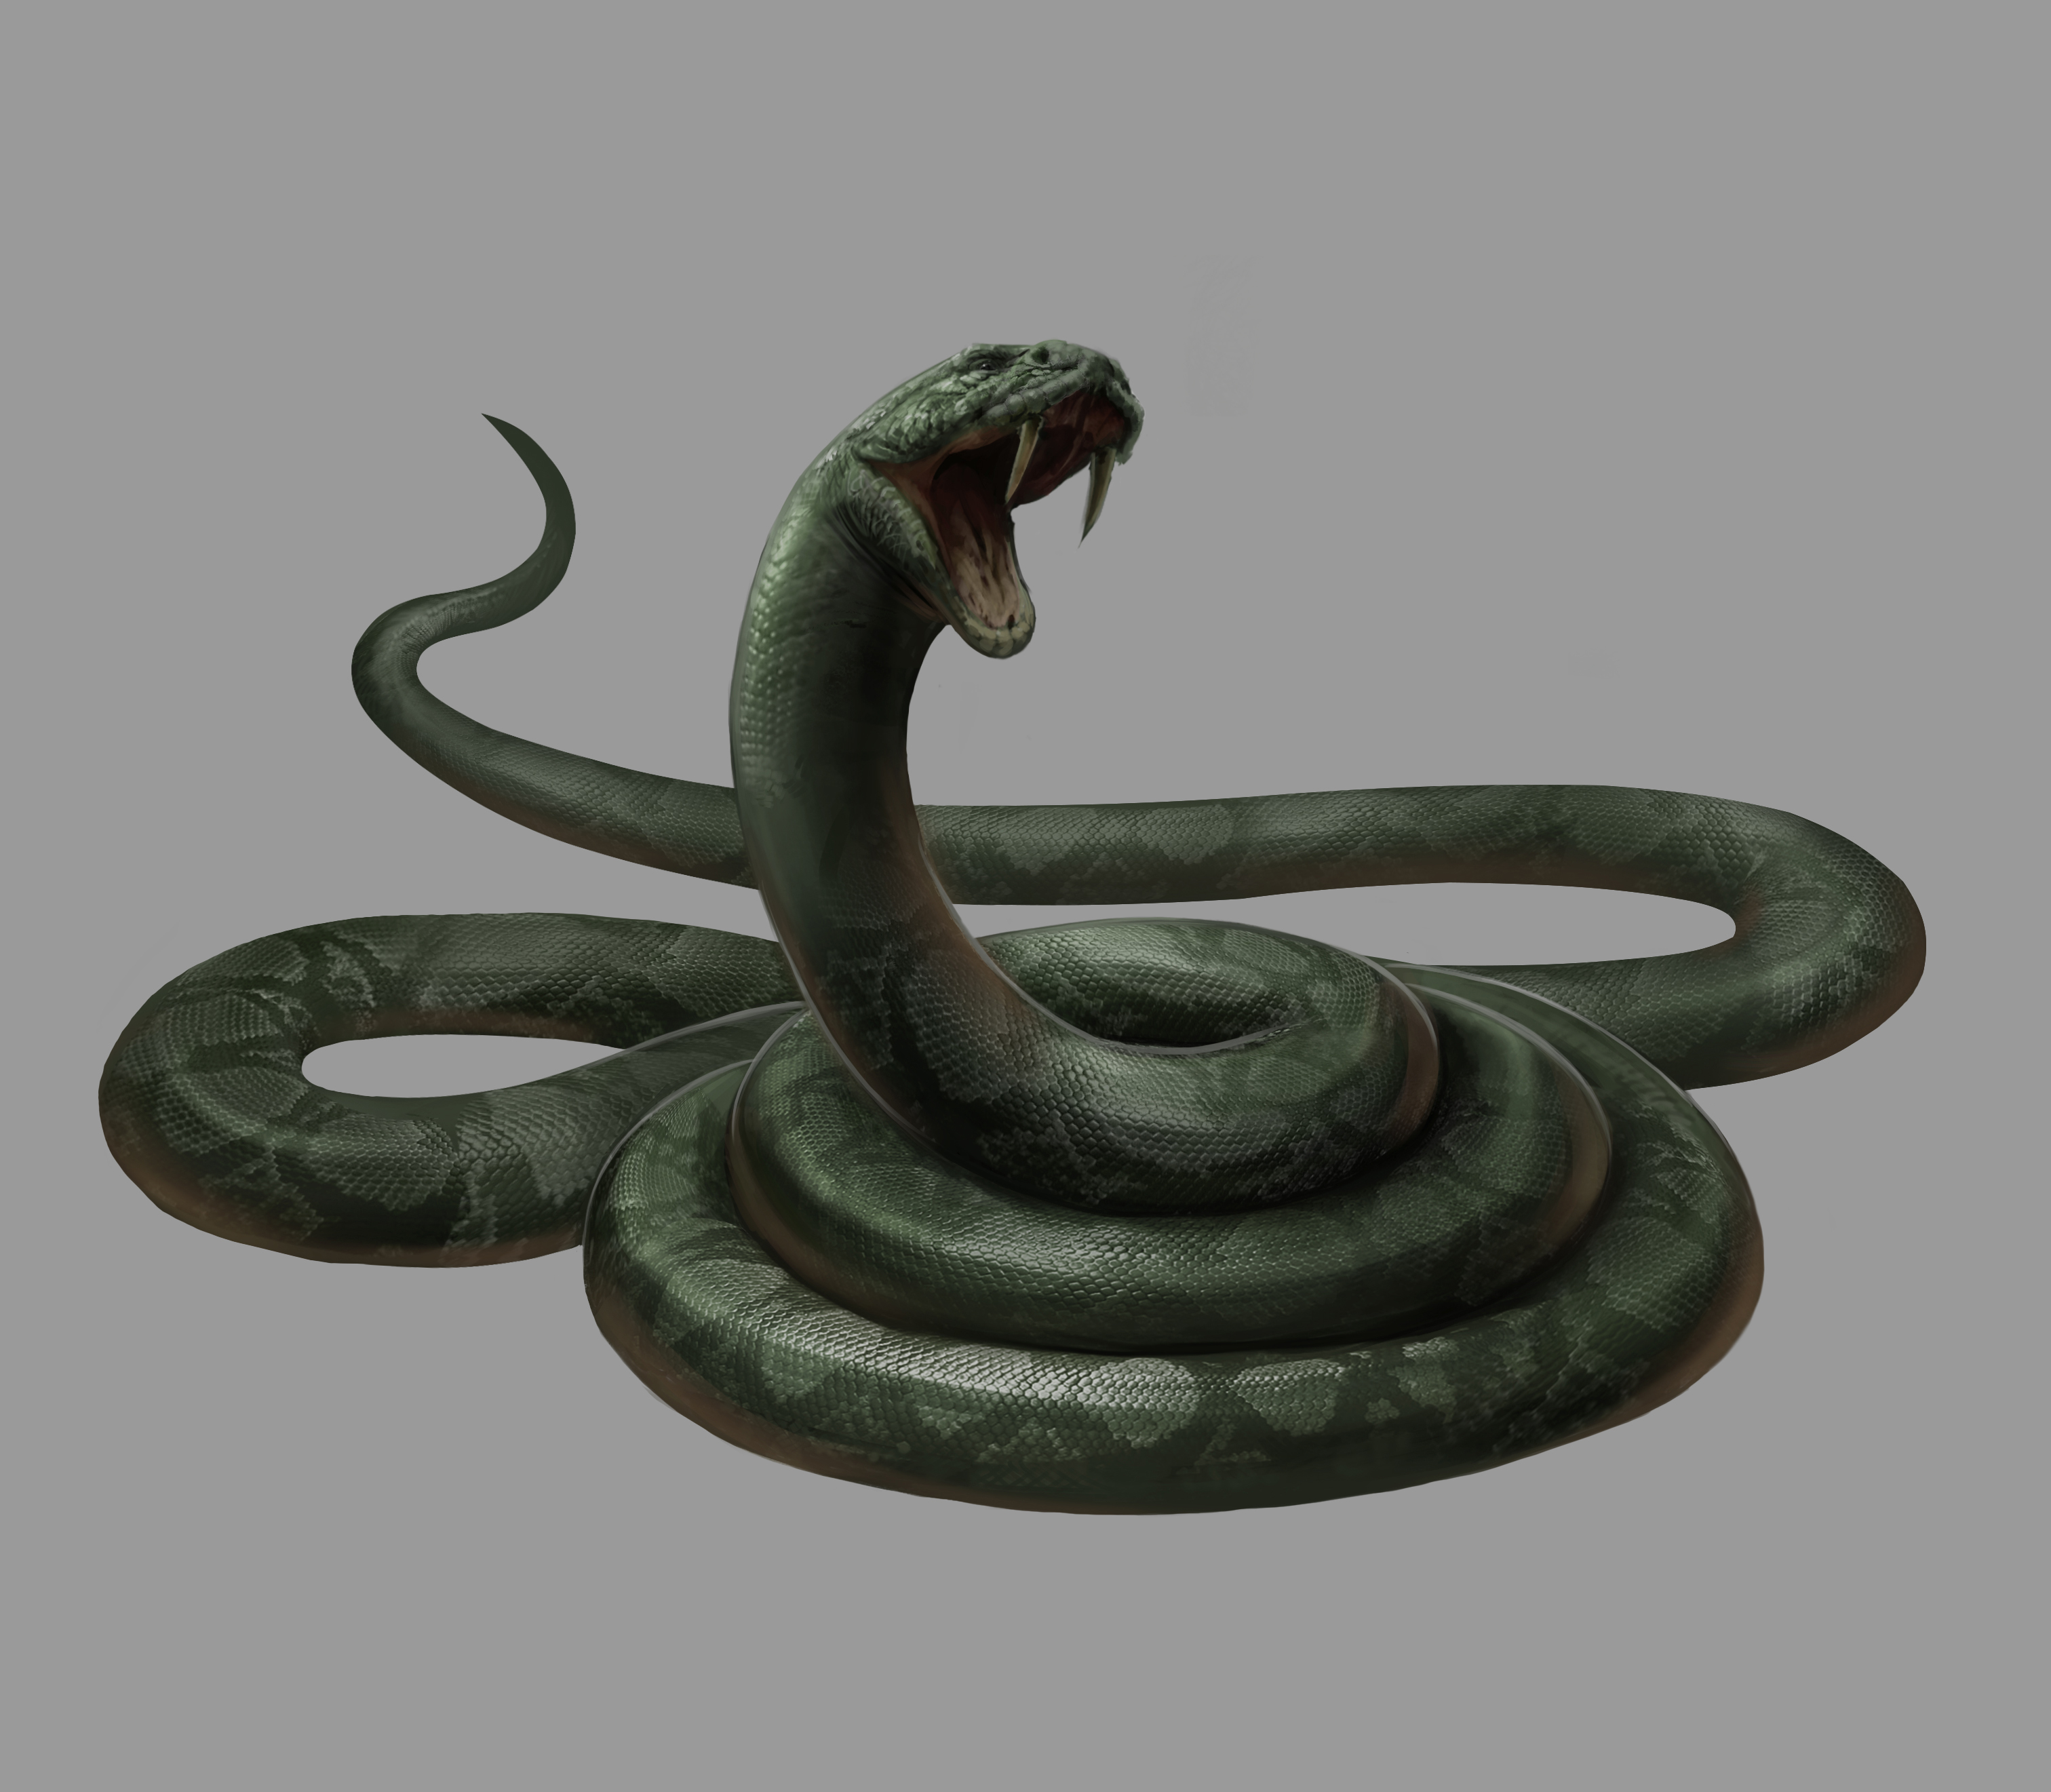 Illustration of Voldemort's snake Nagini